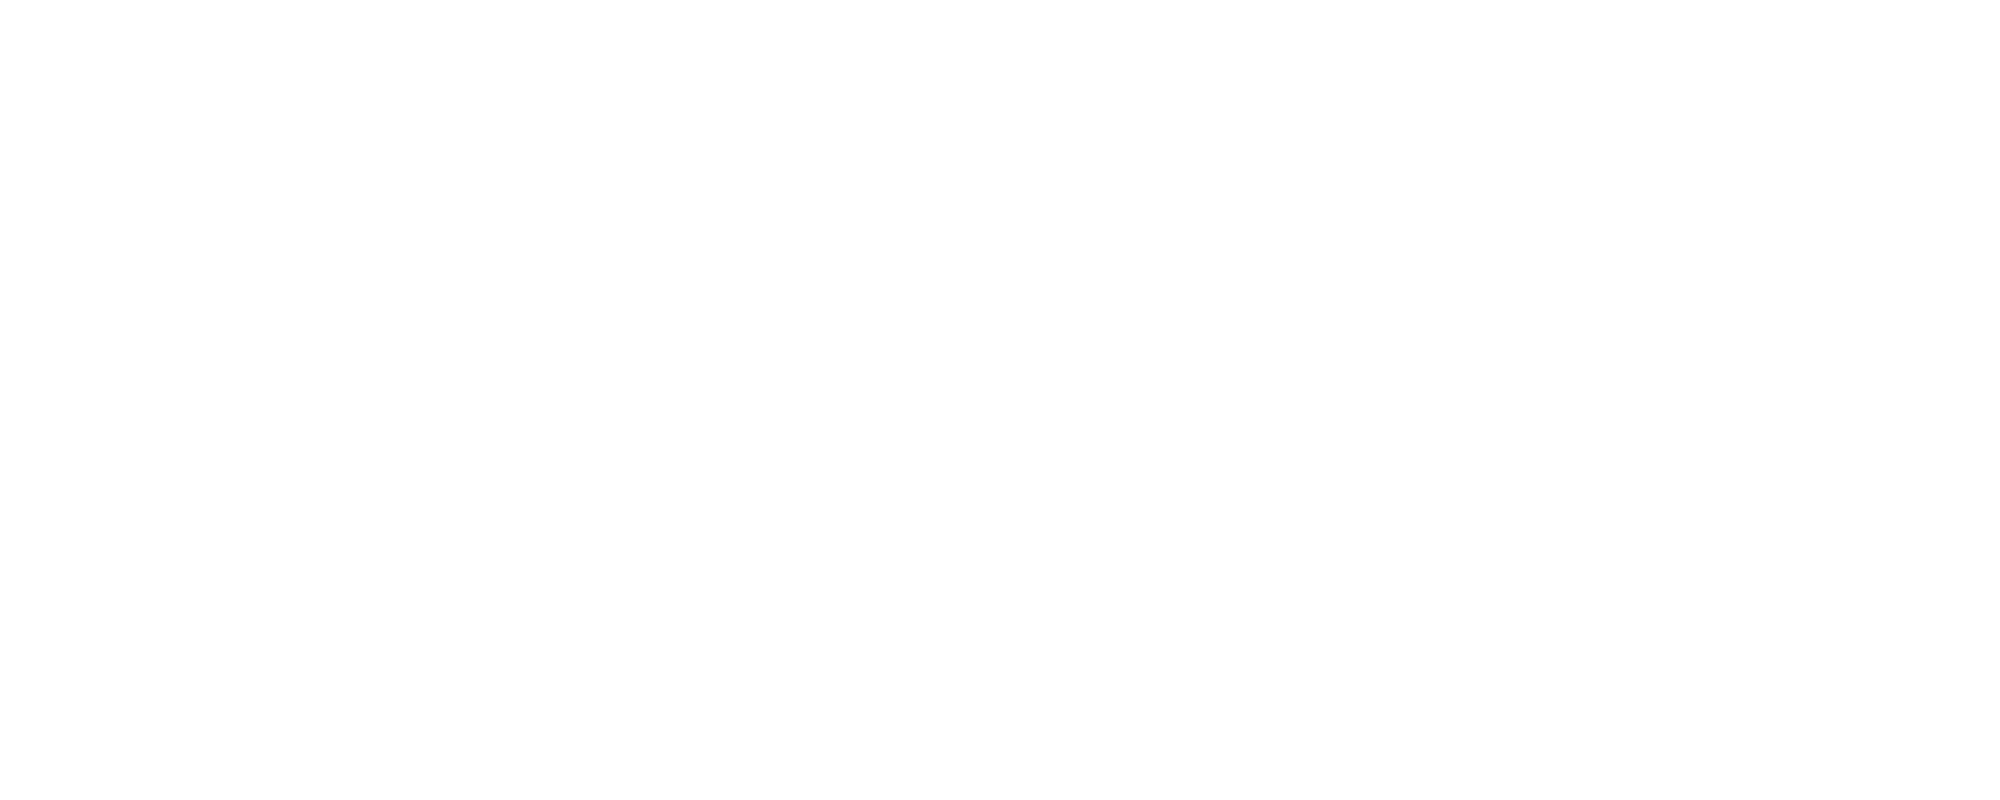 OVATION TV’S STATEMENT ON CONGRESS’ PROPOSED NEA BUDGET